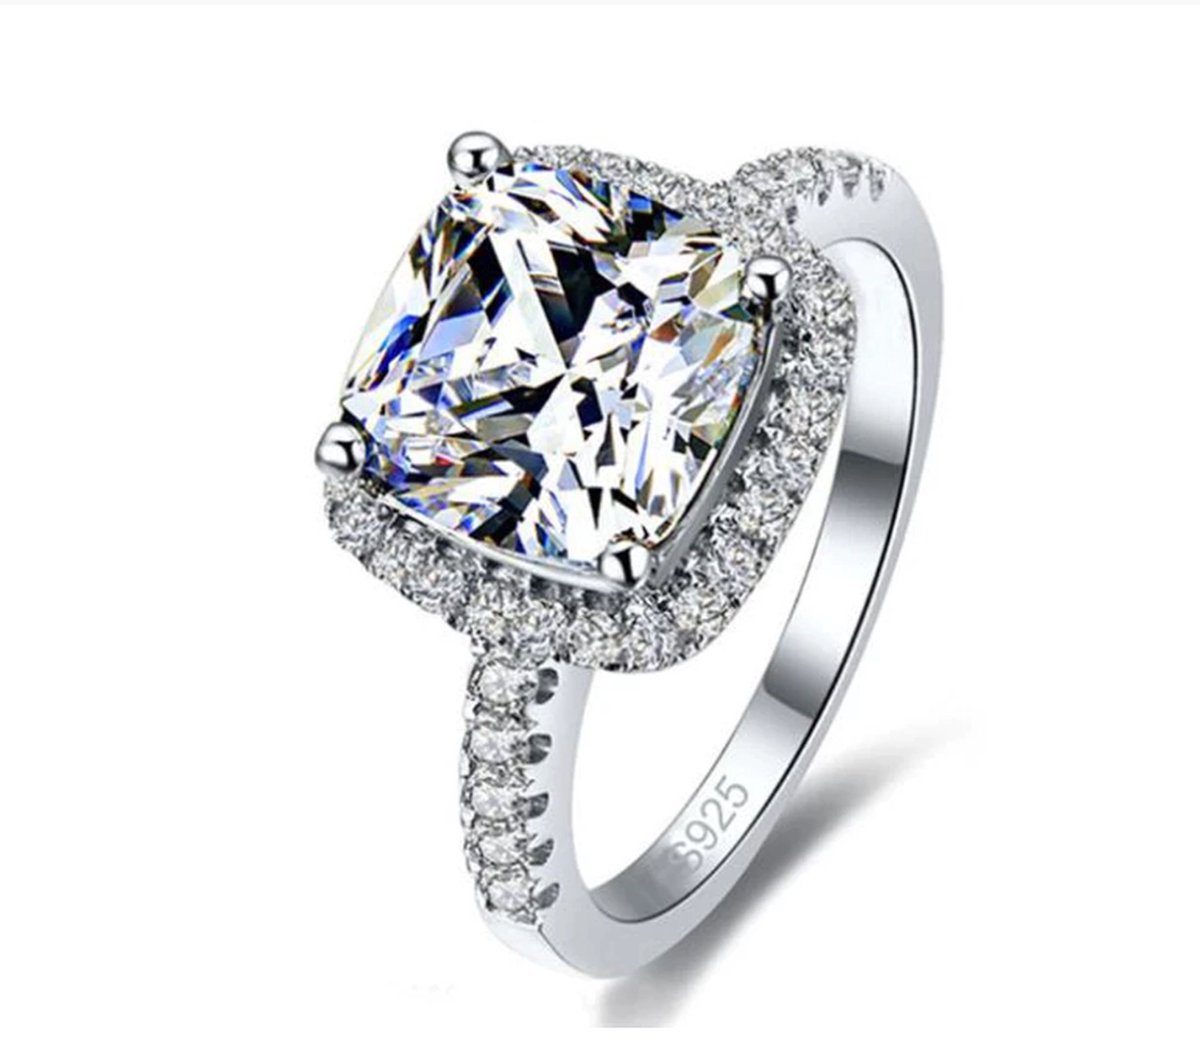 Fiory Crystal Ring| Maat 8 | ring| verlovingsring| gelegenheidsring| vriendschapsring| Luxe, briljante ring| zilver-white | 8